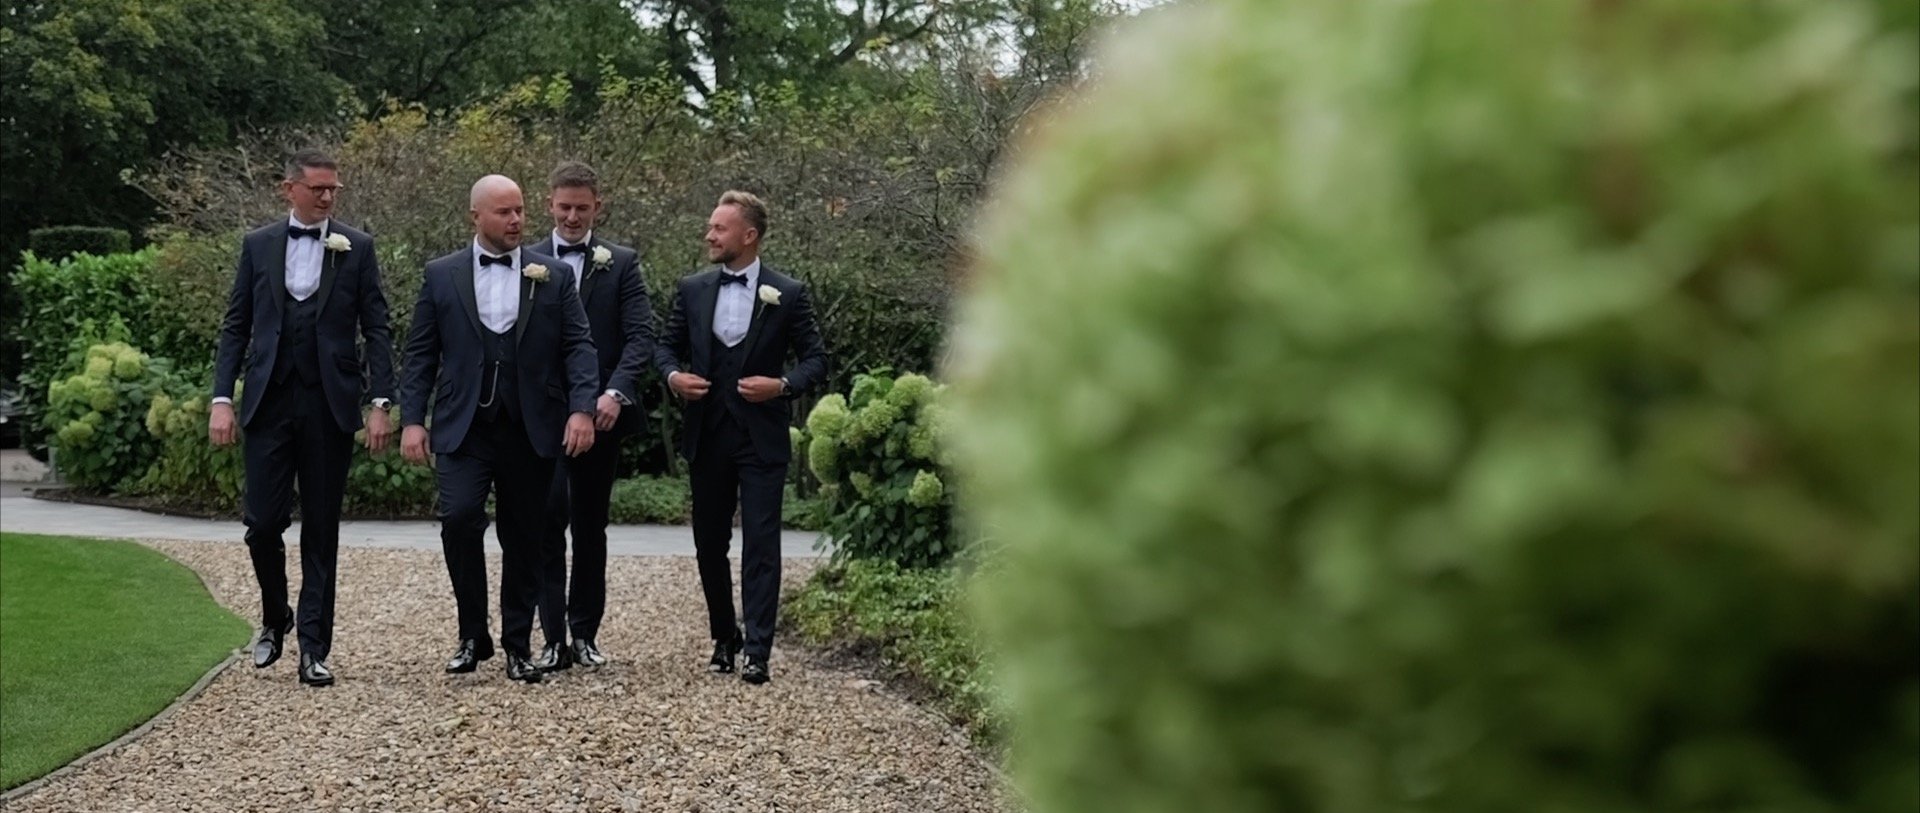 Sopwell House wedding videography - 3 Cheers Media - The groomsmen.jpg